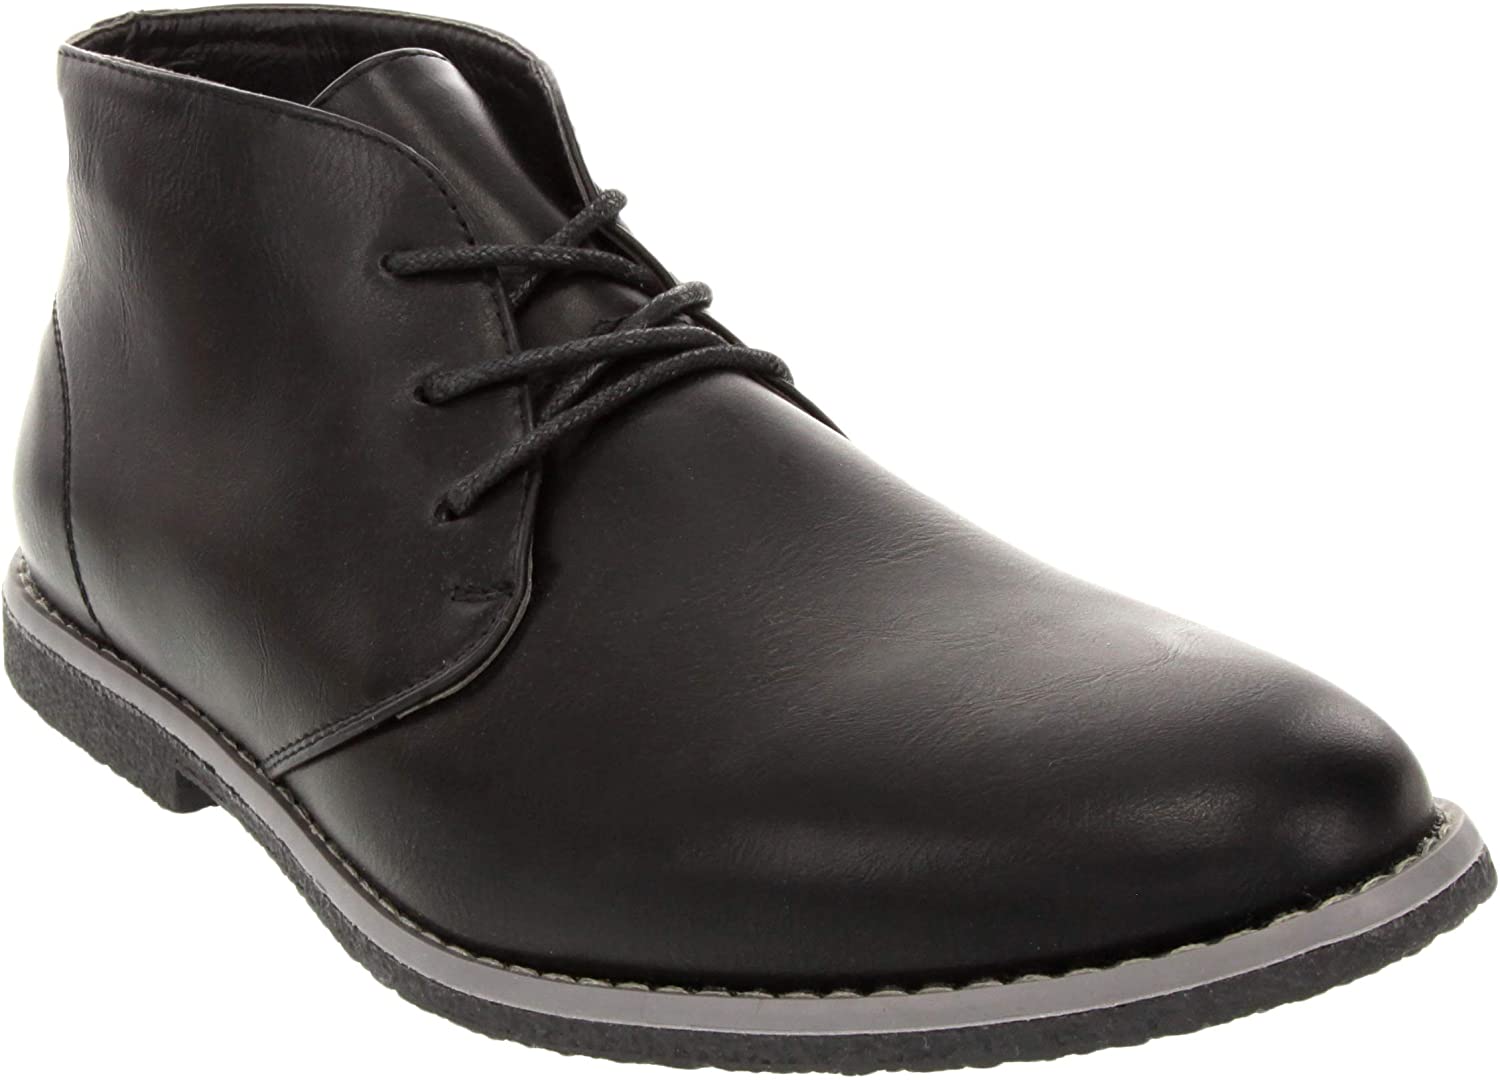 London Fog Mens Broadstreet Chukka Boot, Black, Size 9.0 aQW6 | eBay